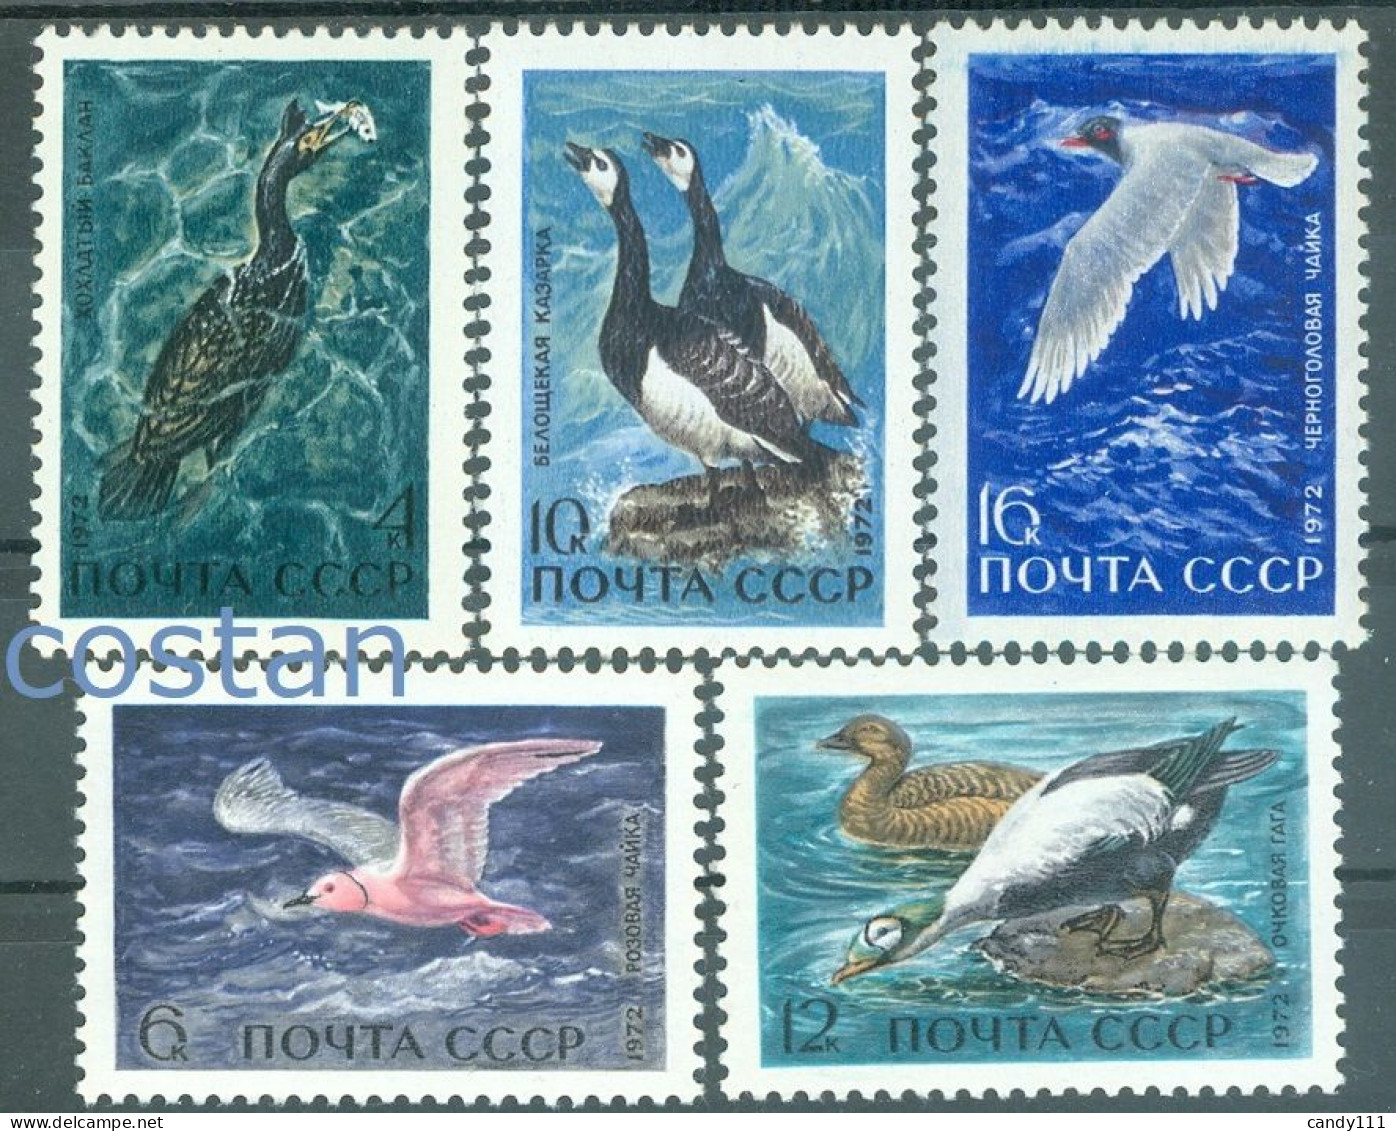 1972 Seabird,Ross's Gull,barnacle Goose,spectacled Eider,cormorant,Russia3974MNH - Seagulls